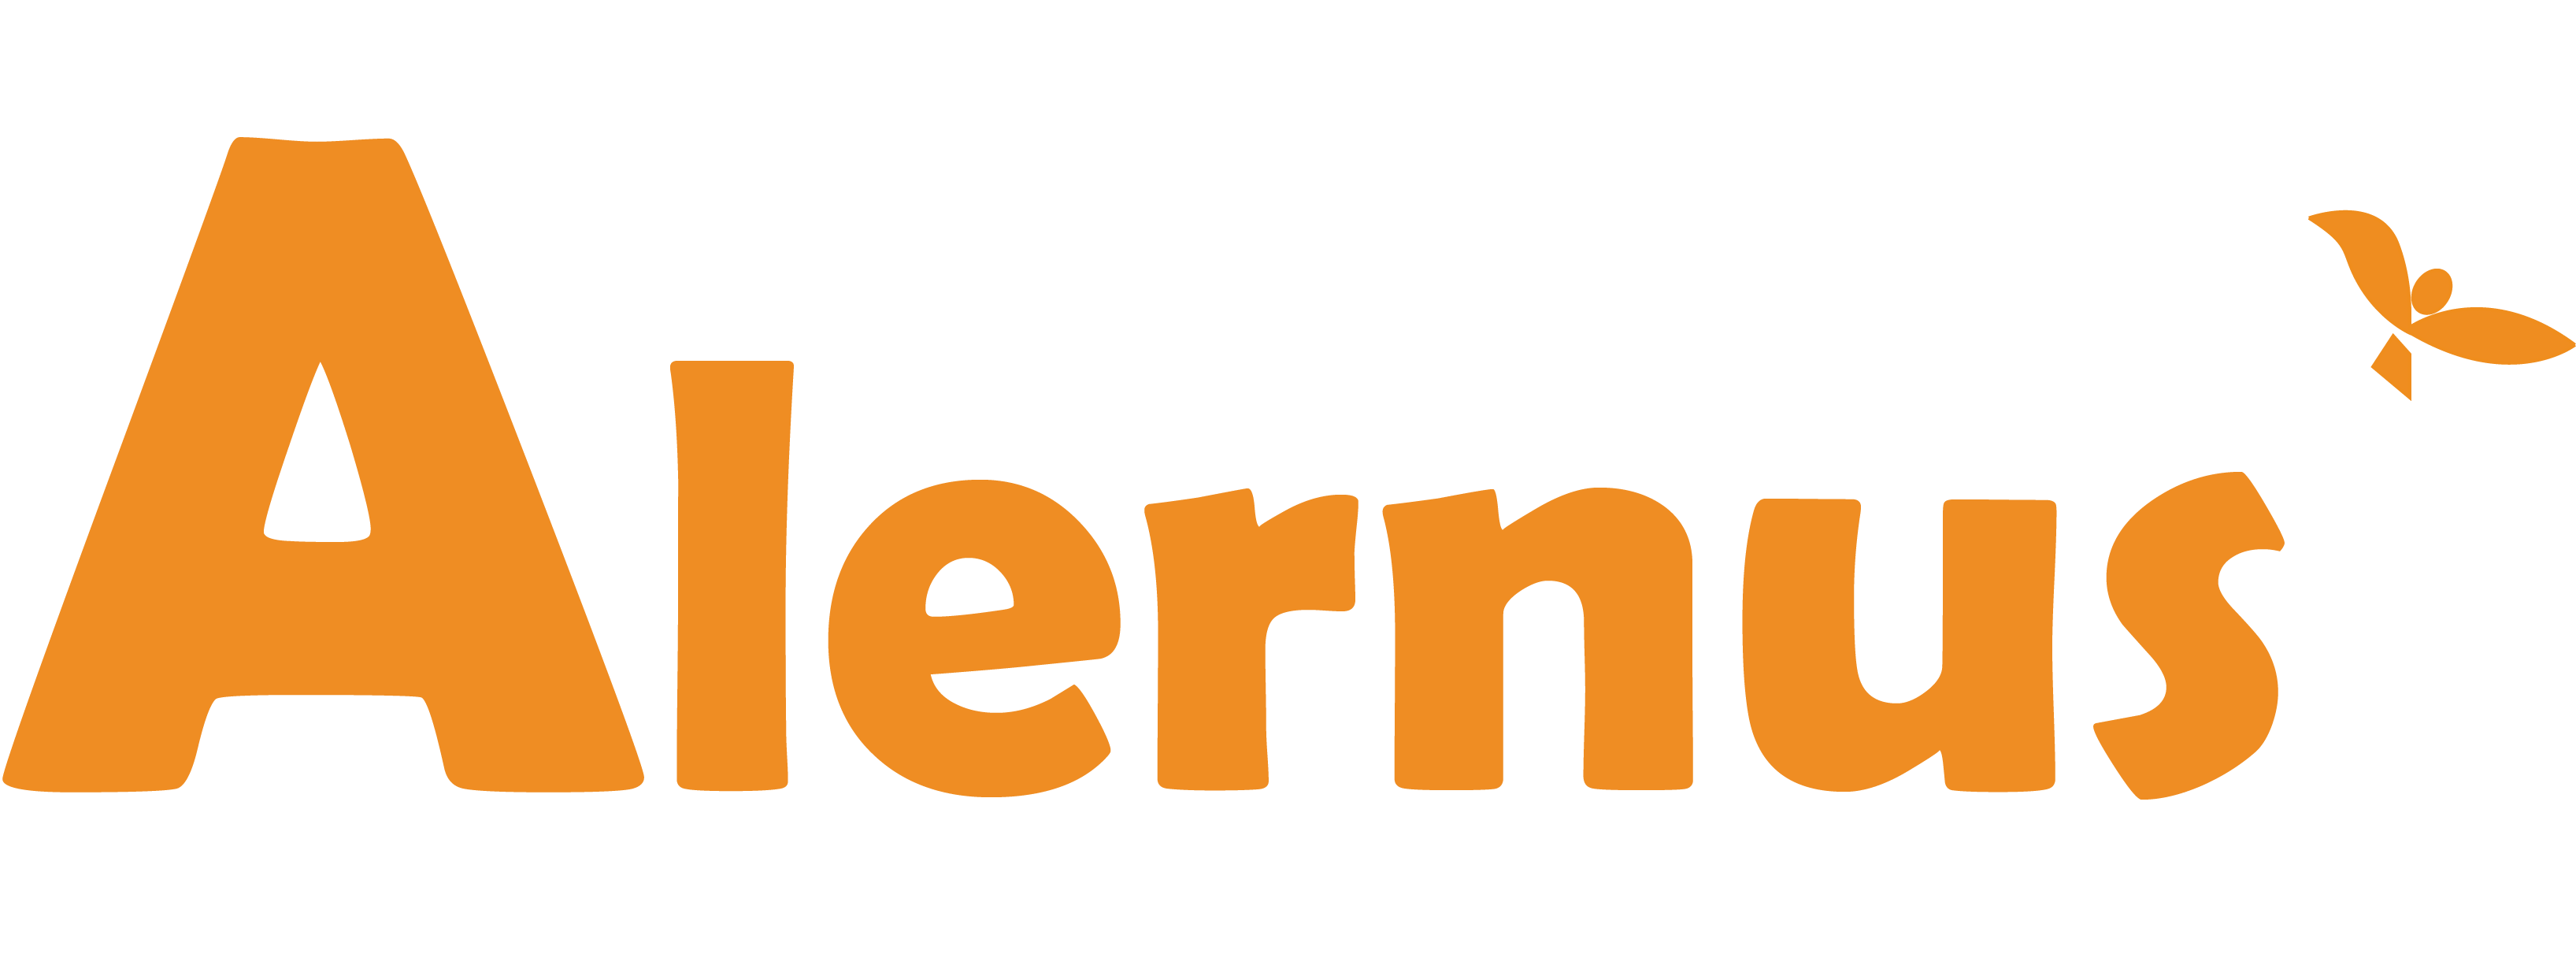 Alernus logo website